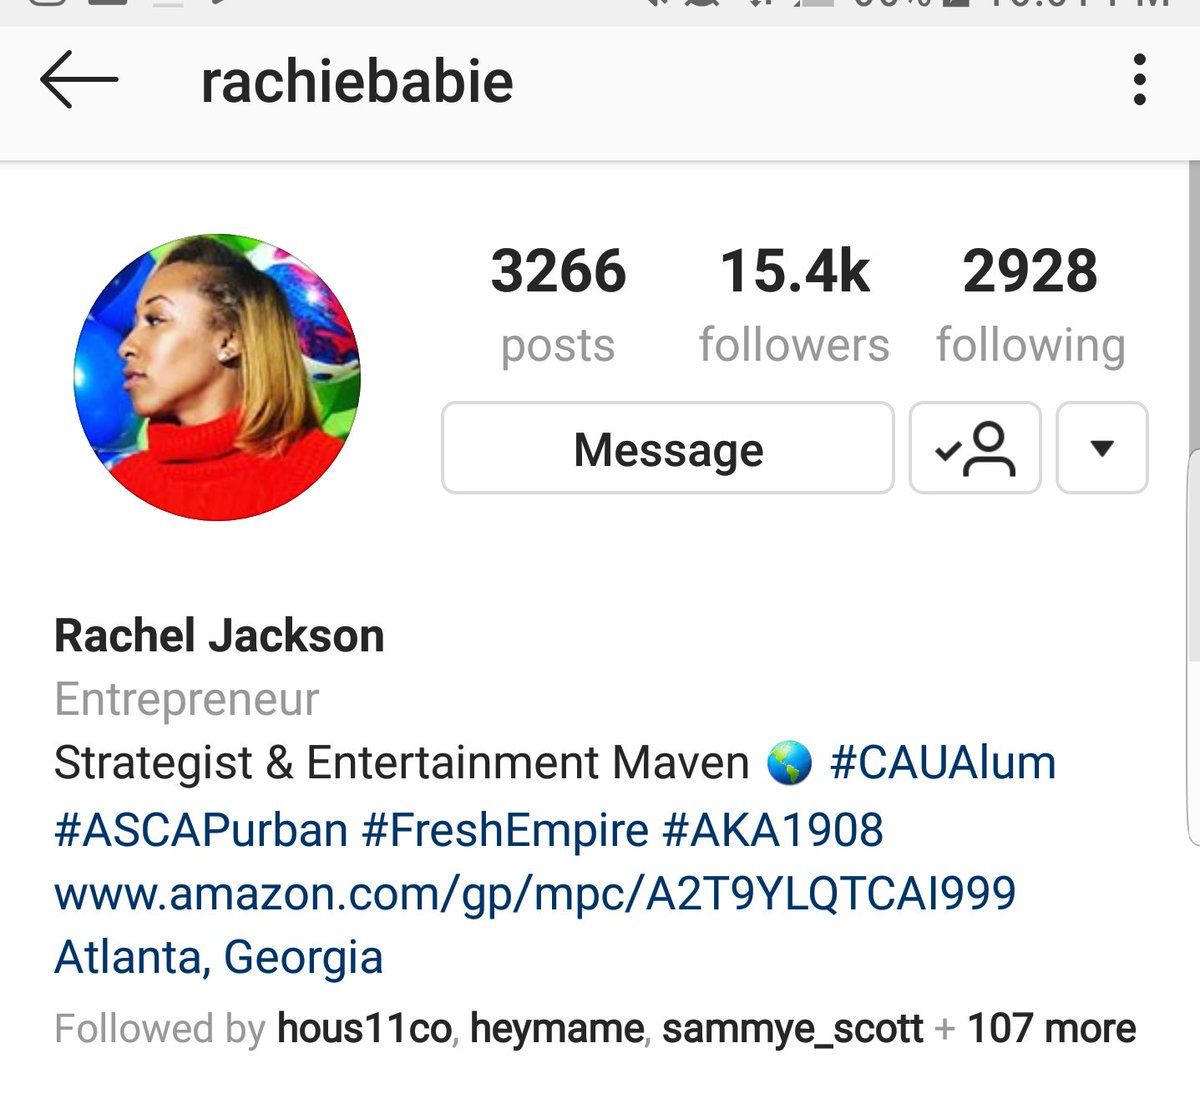 Rachel JacksonIG: rachiebabieEntrepreneurMembership coordinator at ASCAP Urban